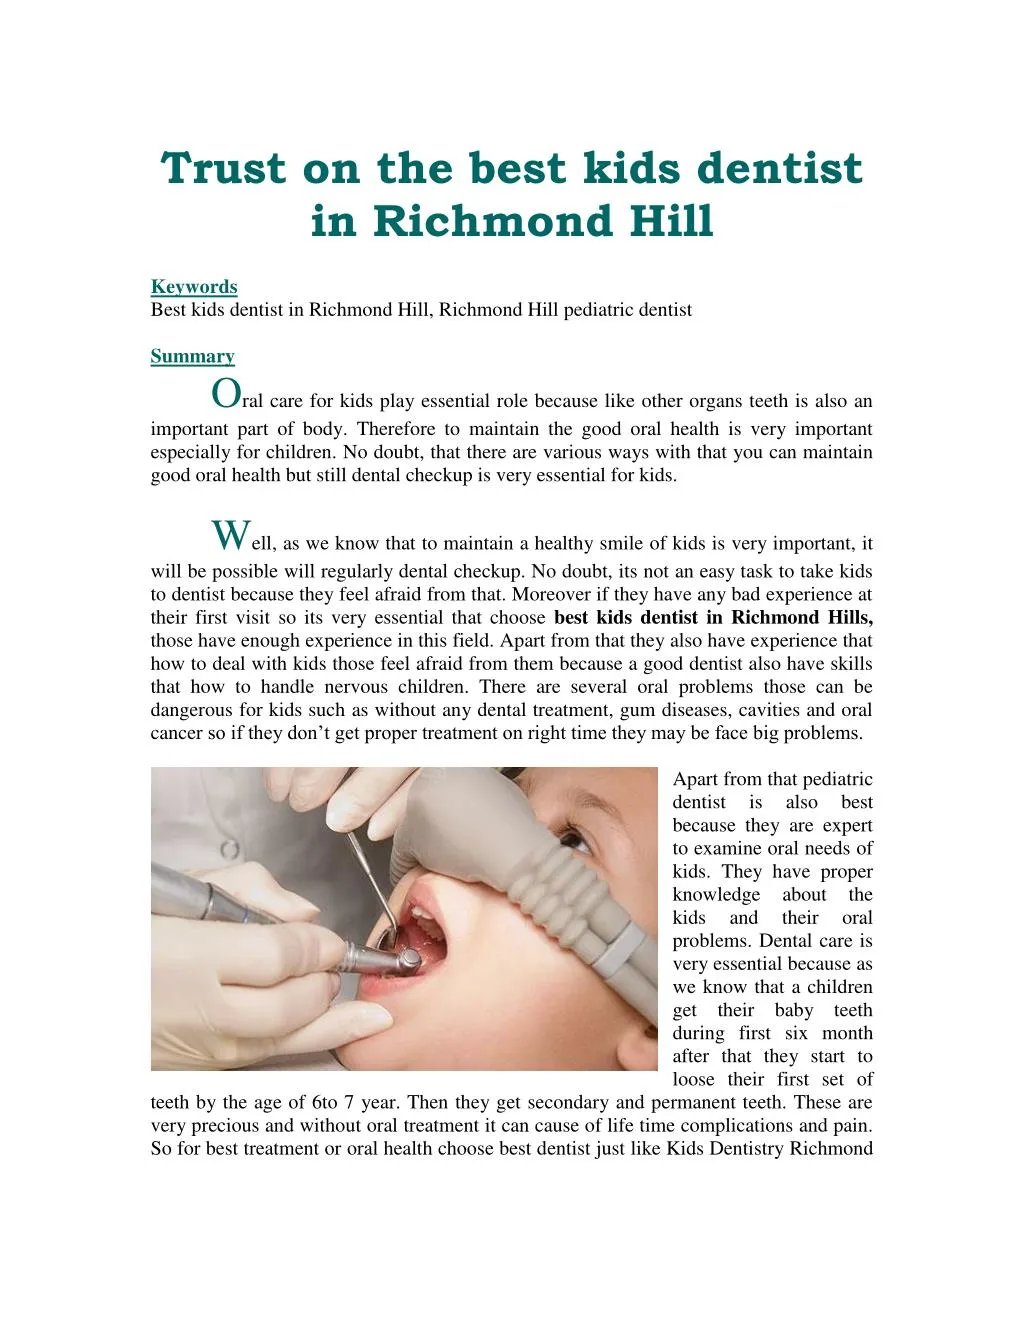 trust on the best kids dentist in richmond hill